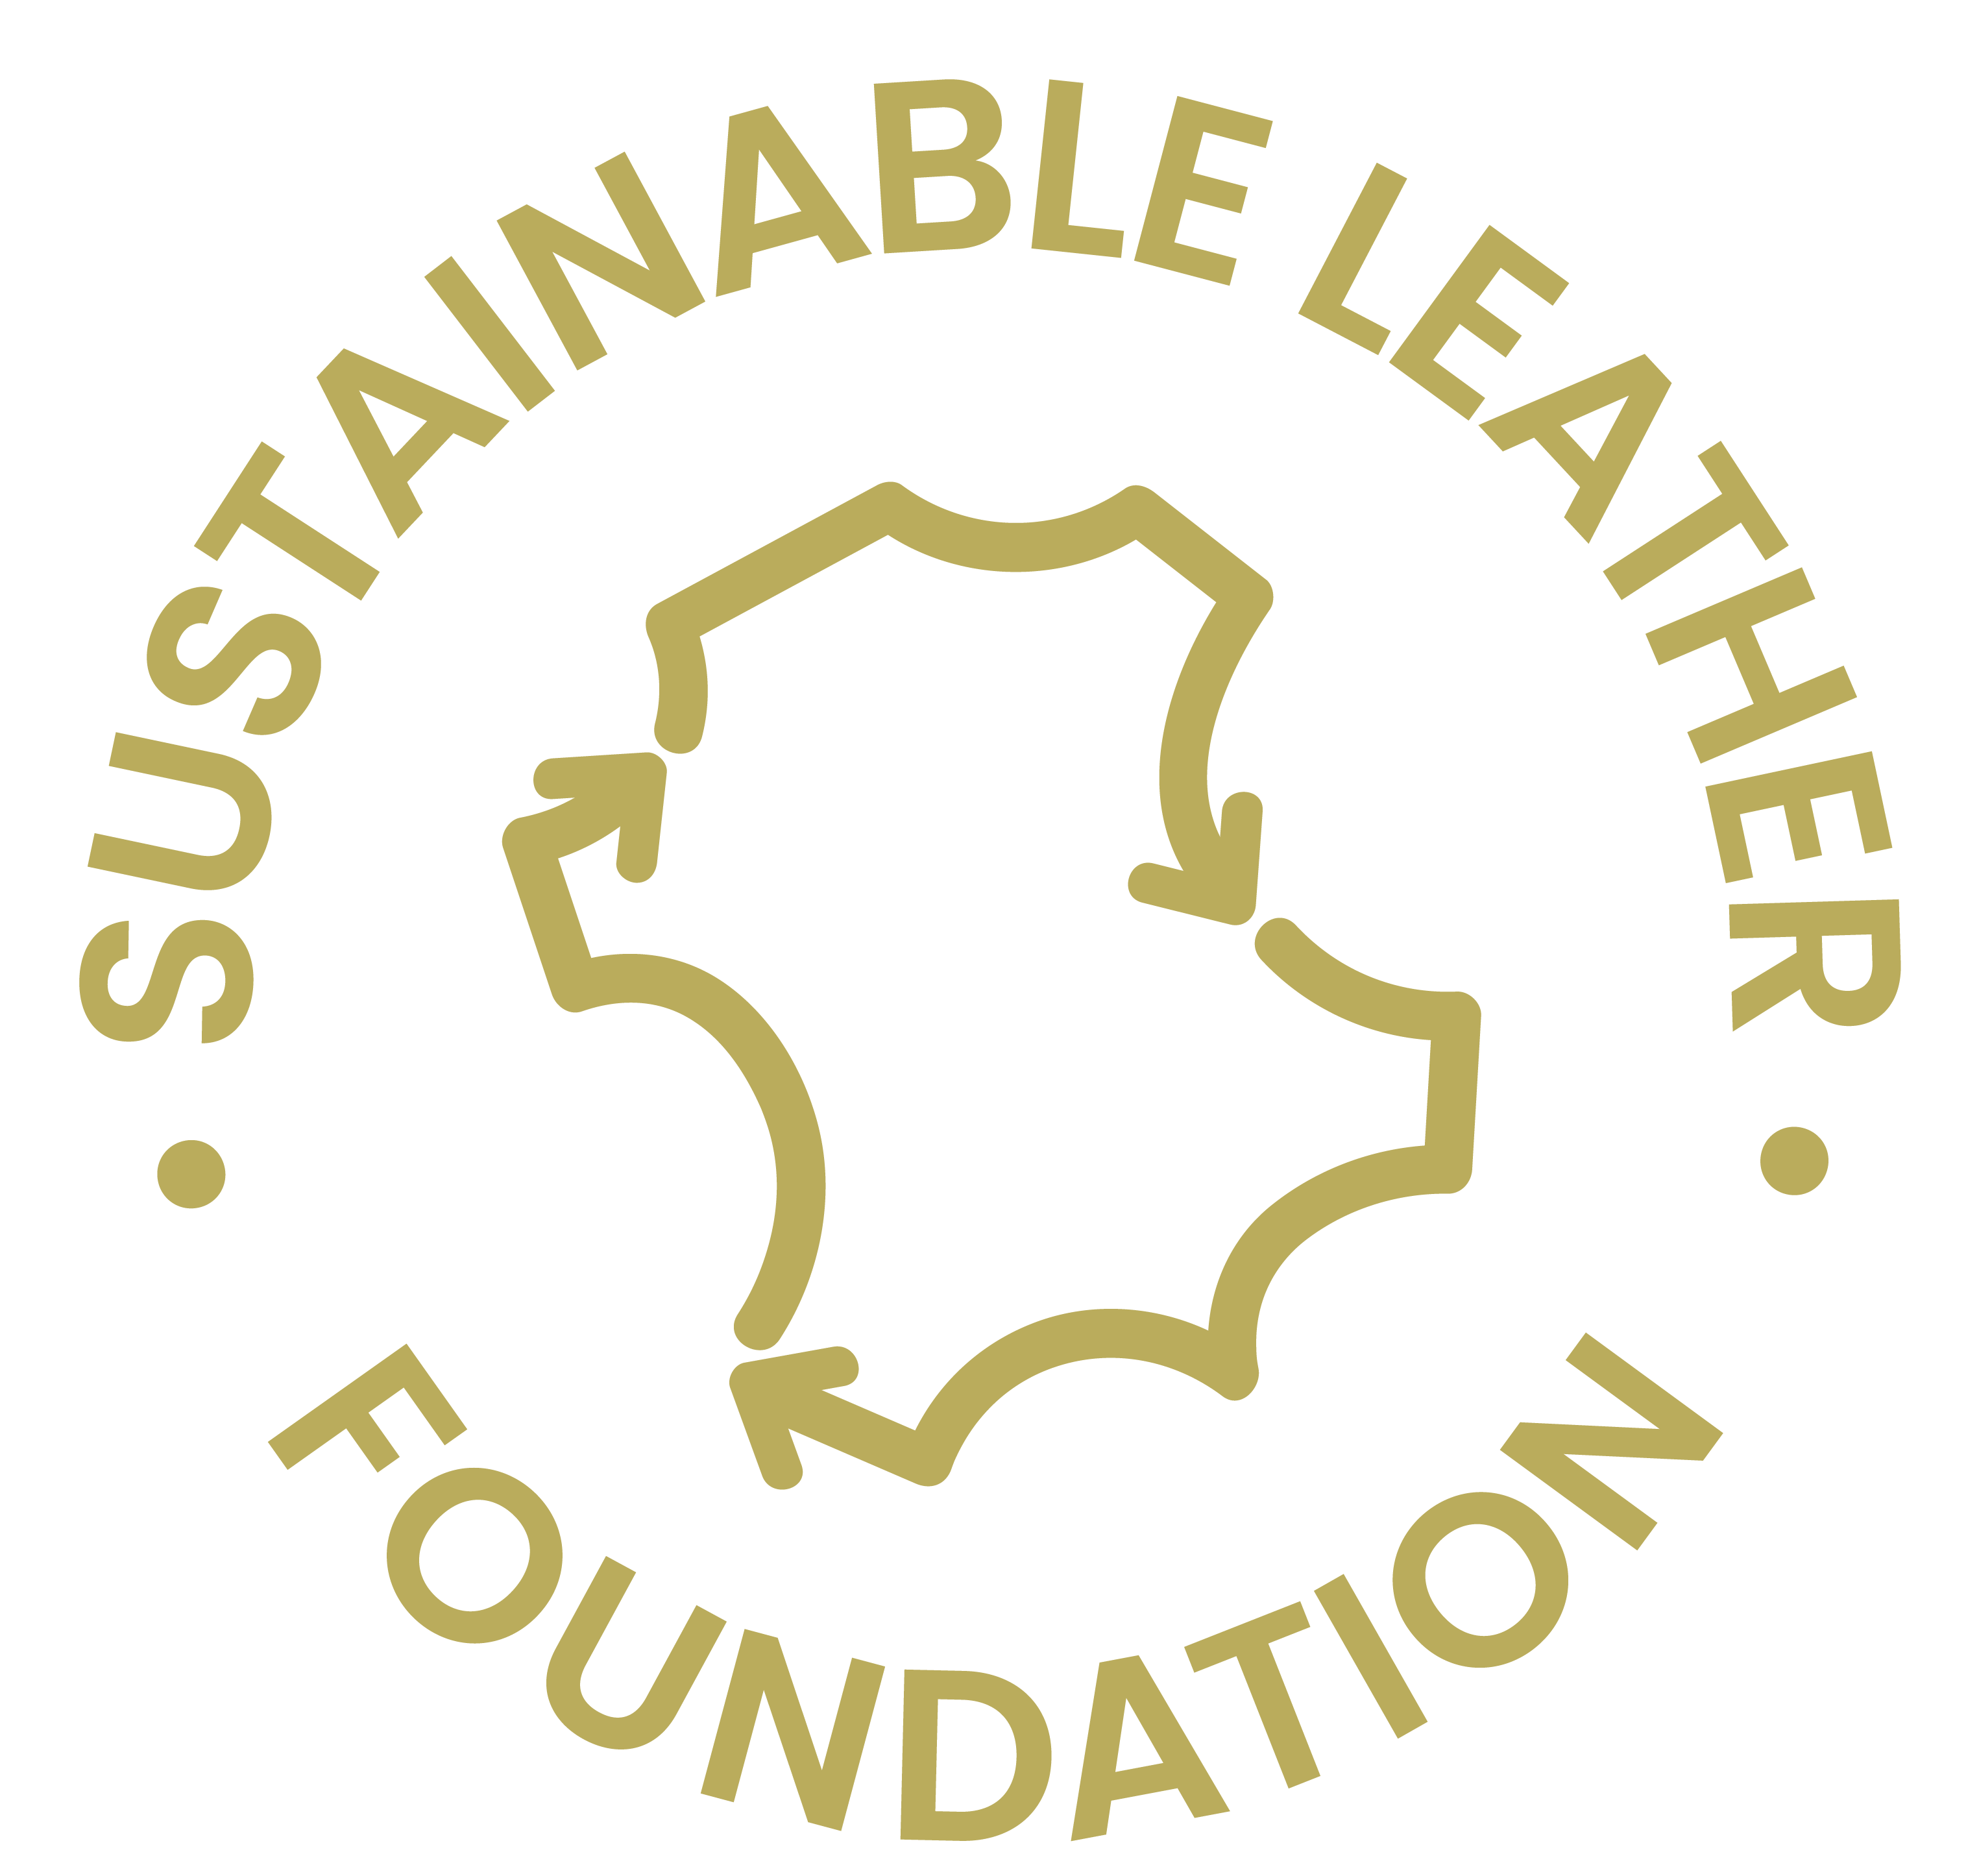 Sustainable Leather Foundation